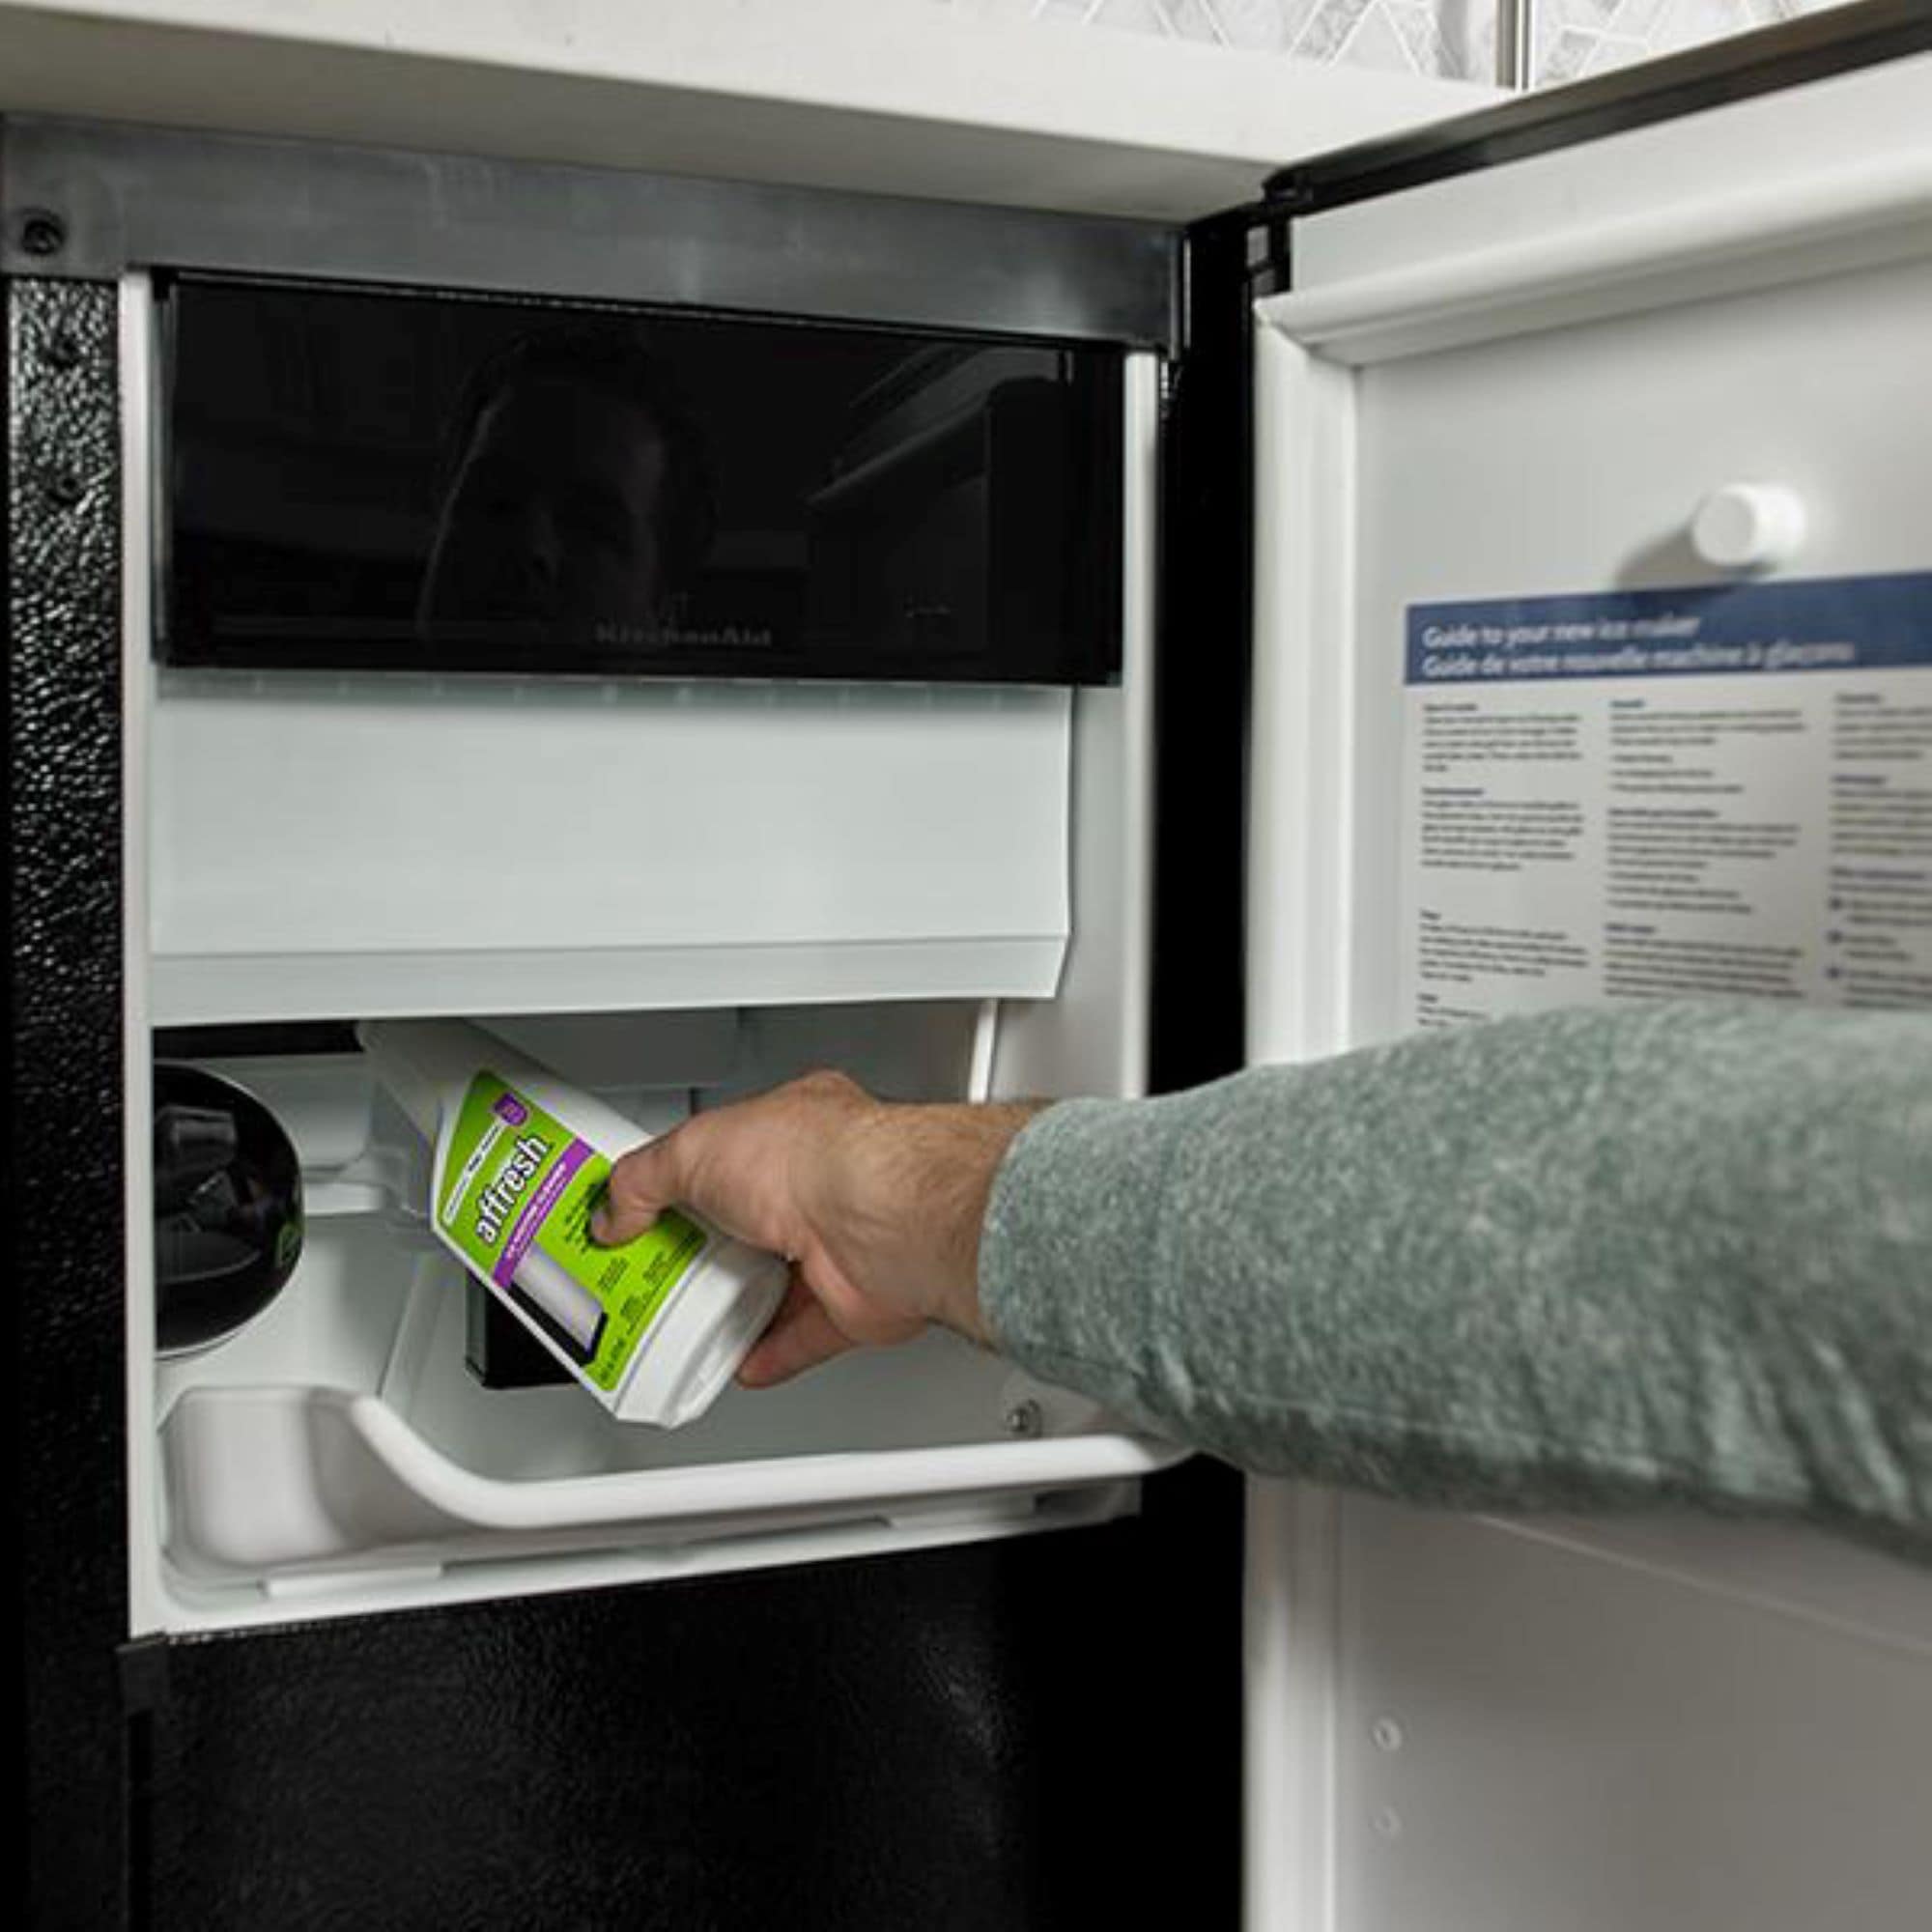 Affresh 16 oz. Unscented Liquid Ice Machine Cleaner W11179302 - The Home  Depot